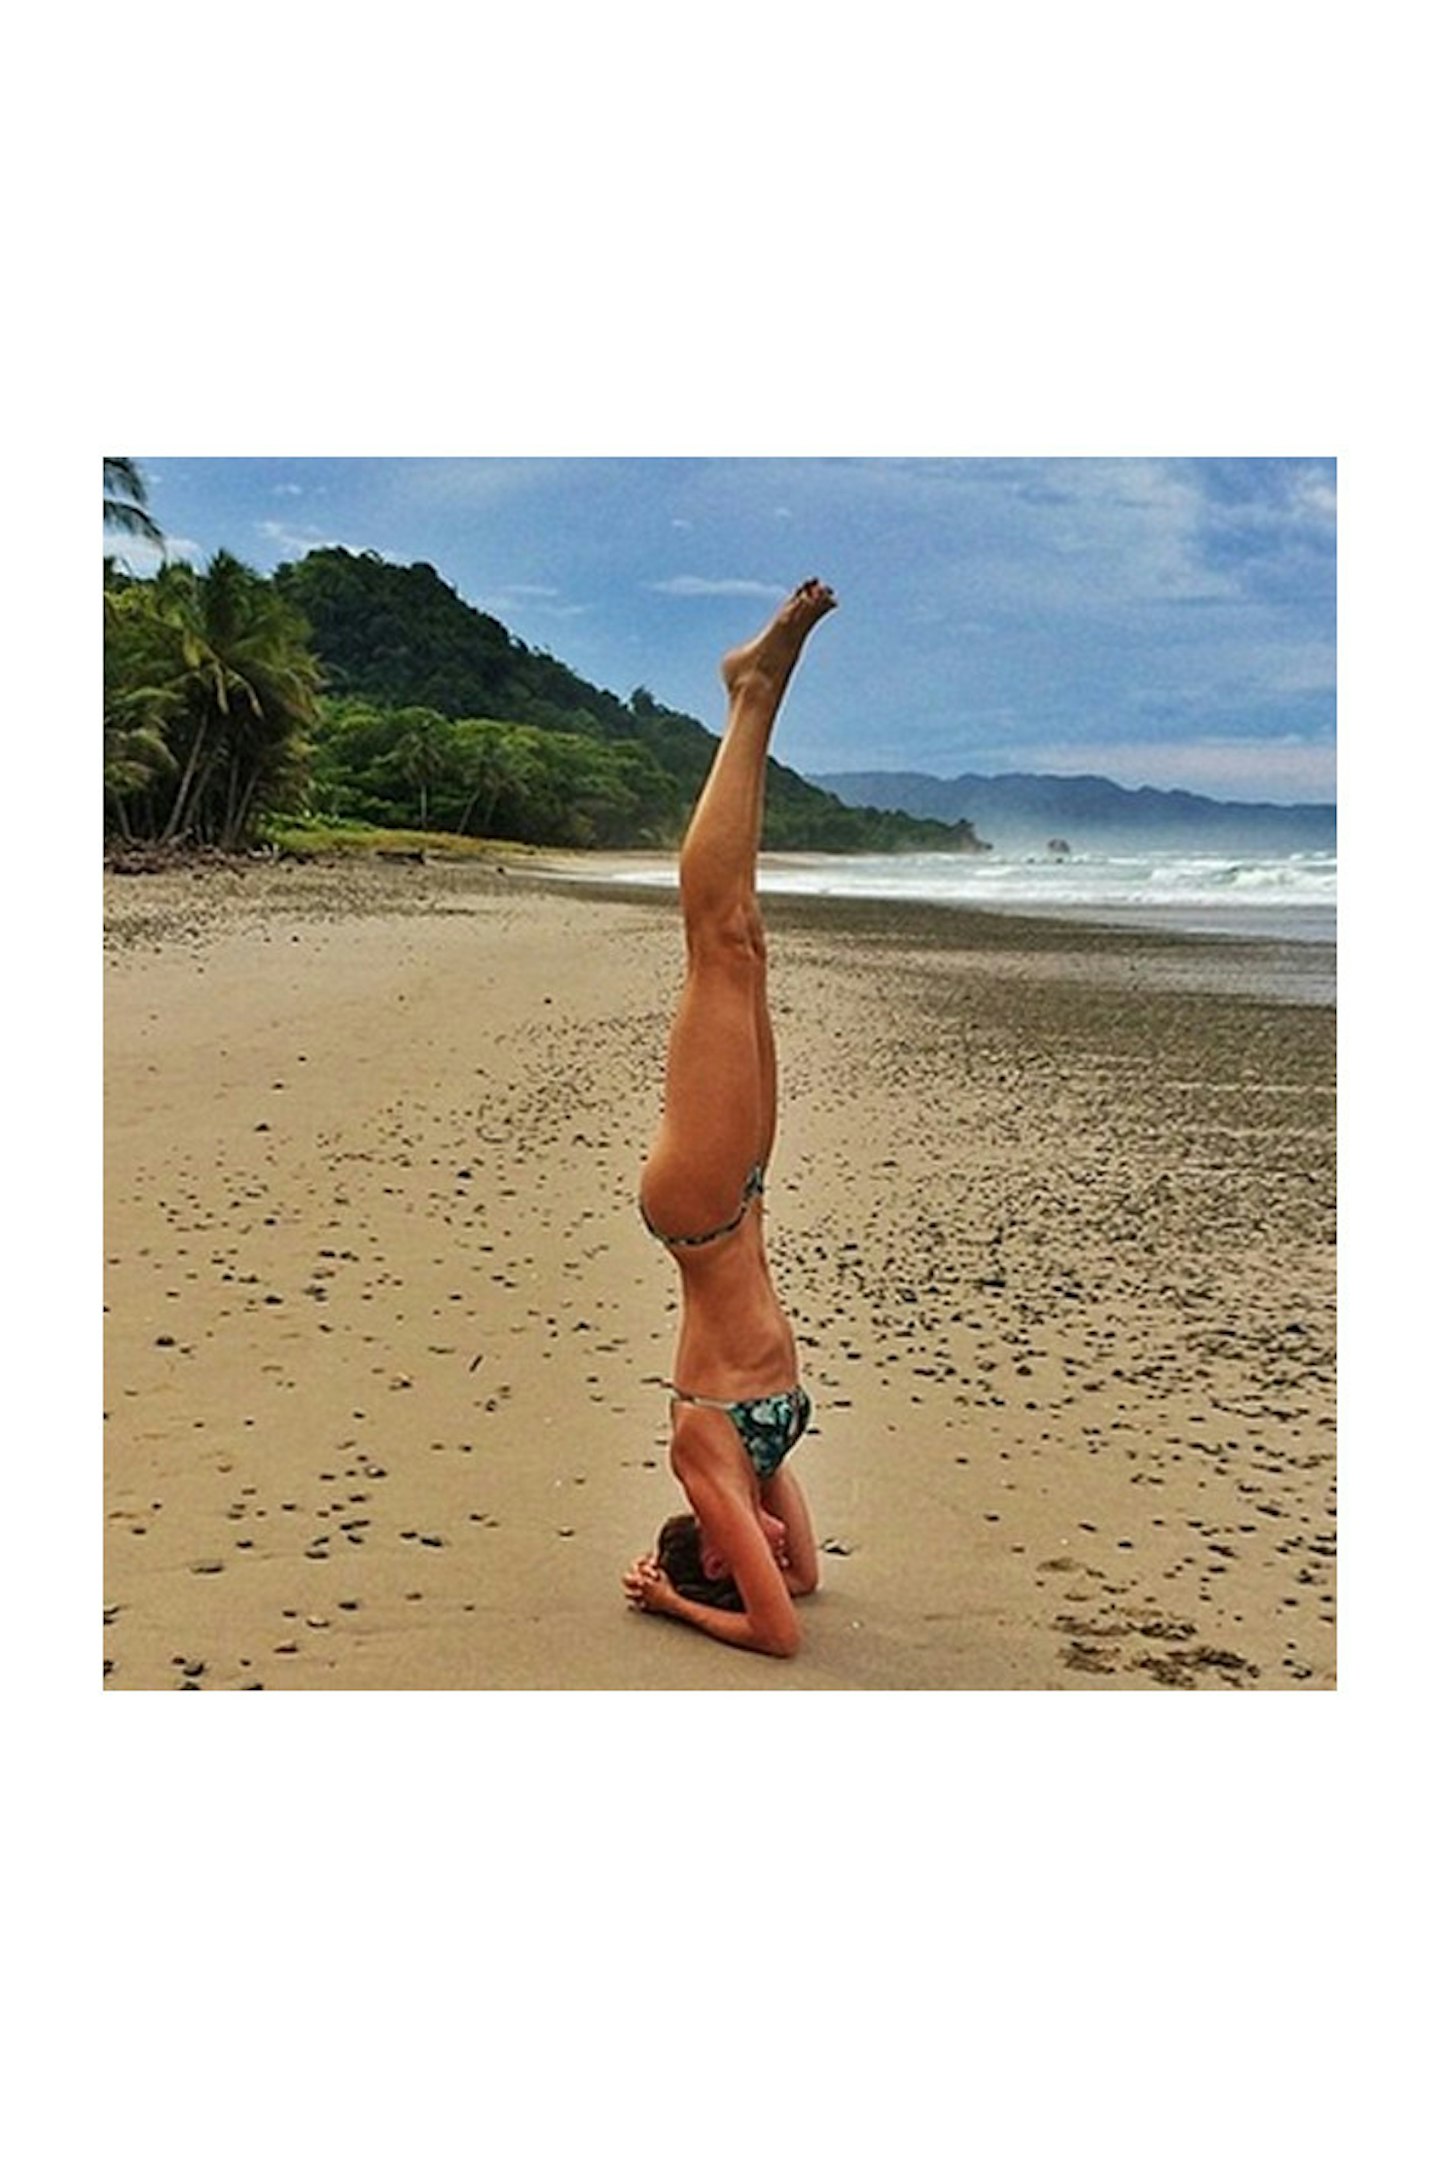 yoga2